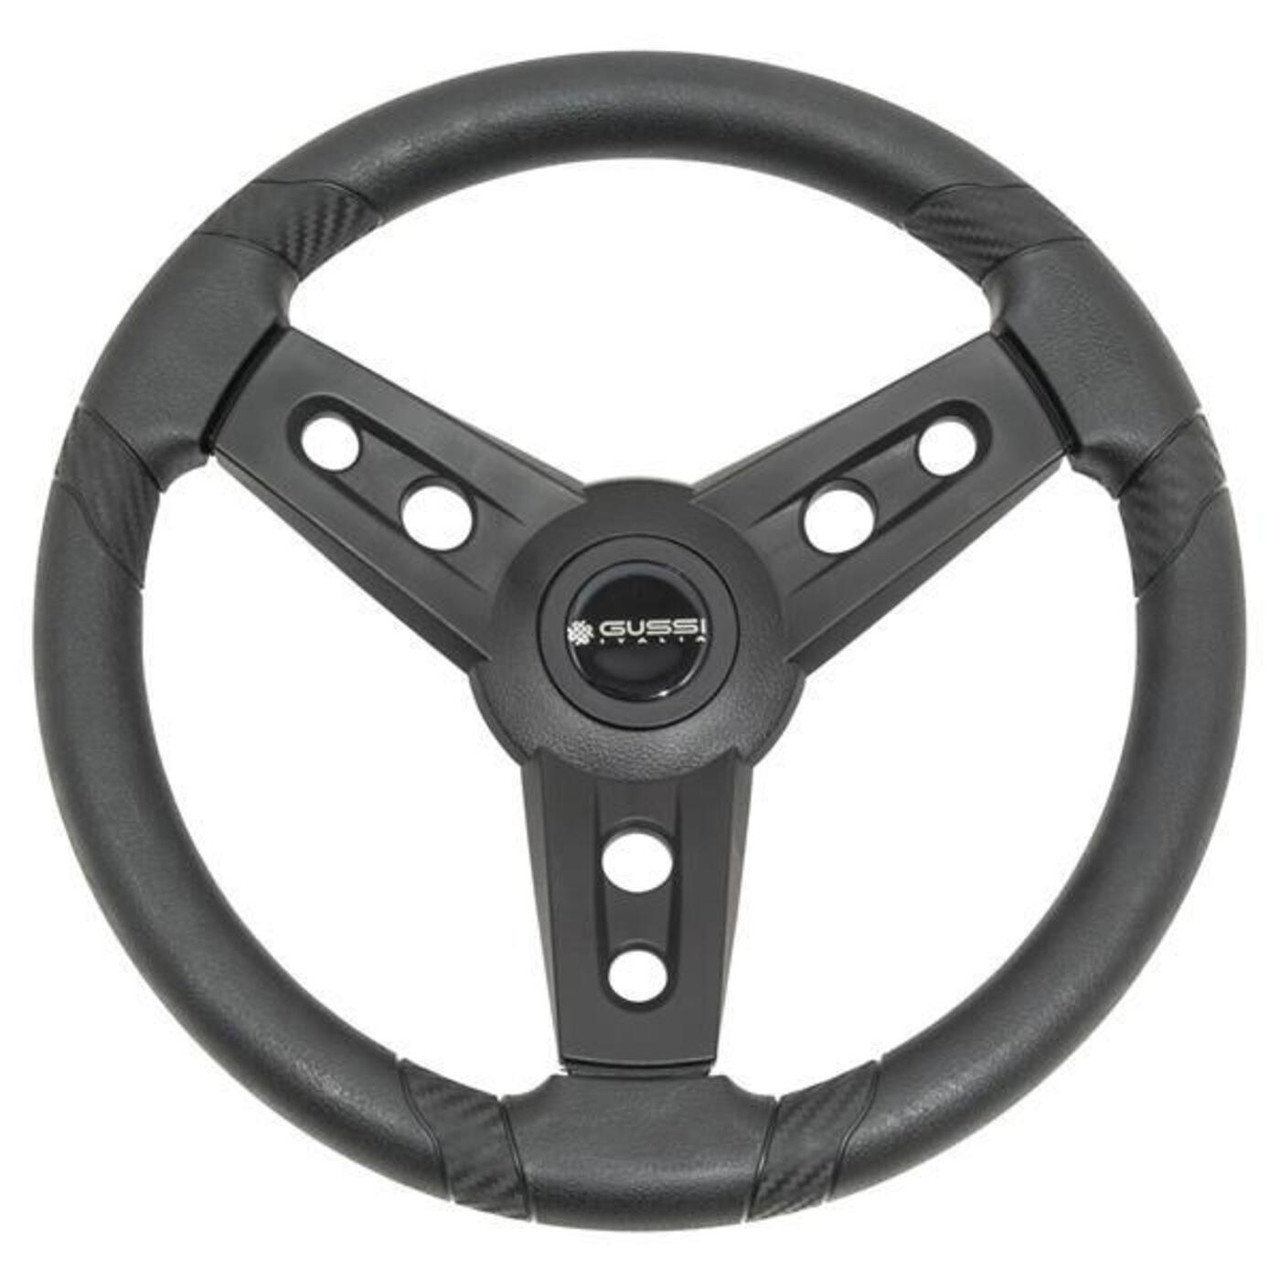 Gussi Italia Lugana Steering Wheel for Yamaha G16-Drive2 Golf Cart, 06-024